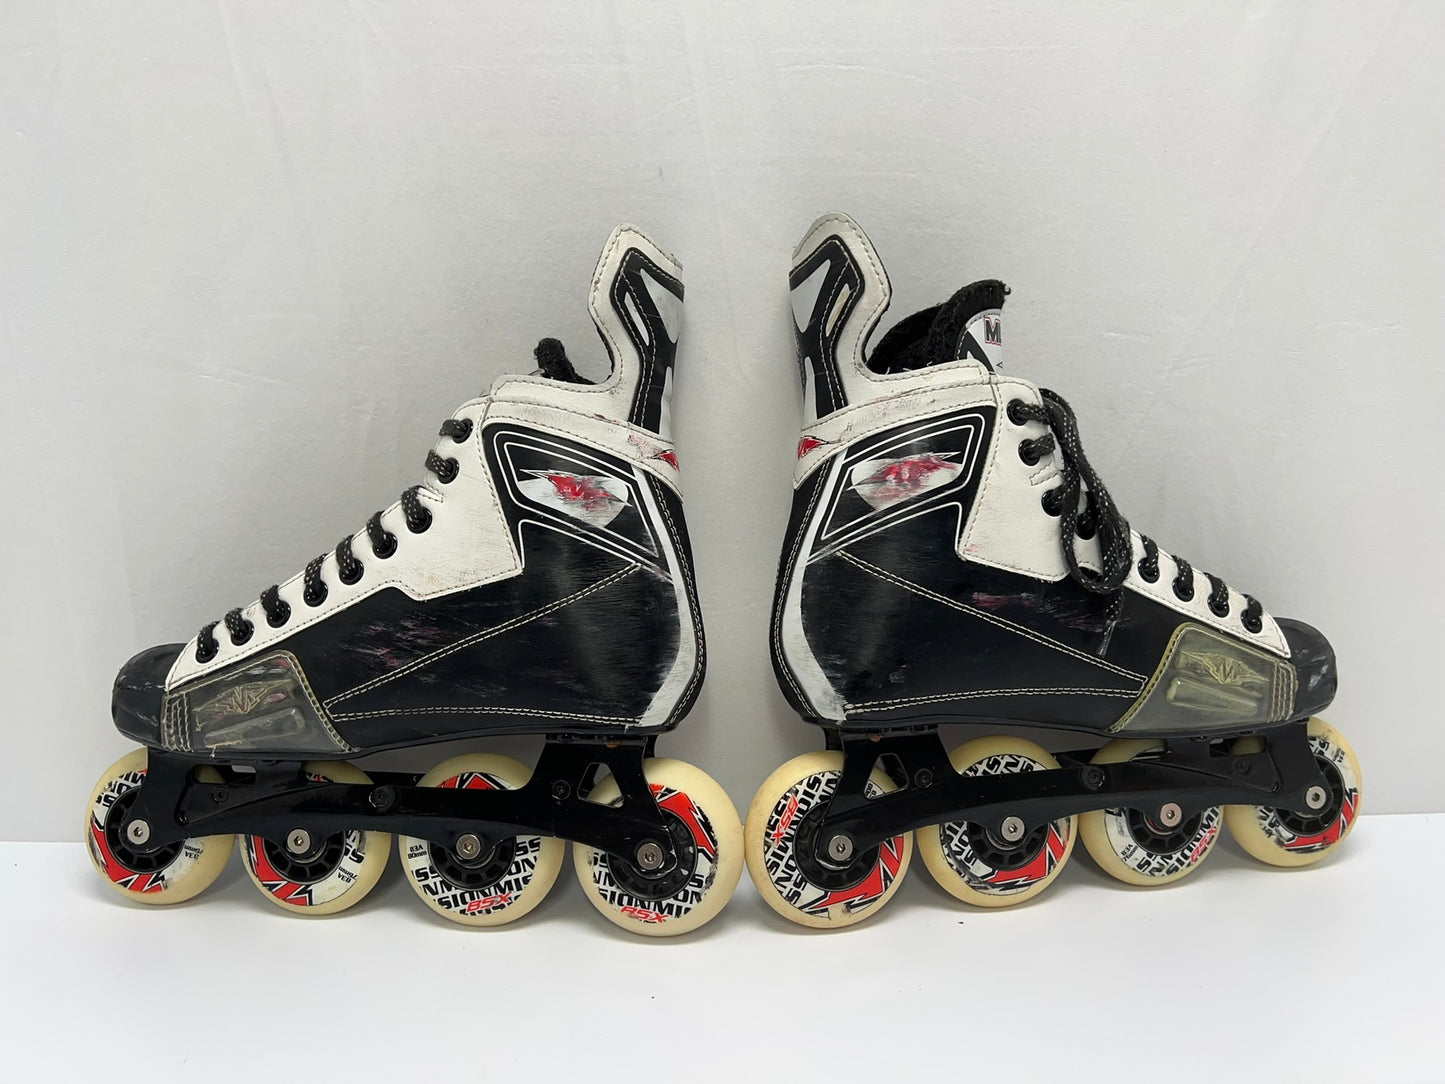 Hockey Roller Hockey Skates Men's Size 7E Shoe Size Mission Black White Rubber Wheels